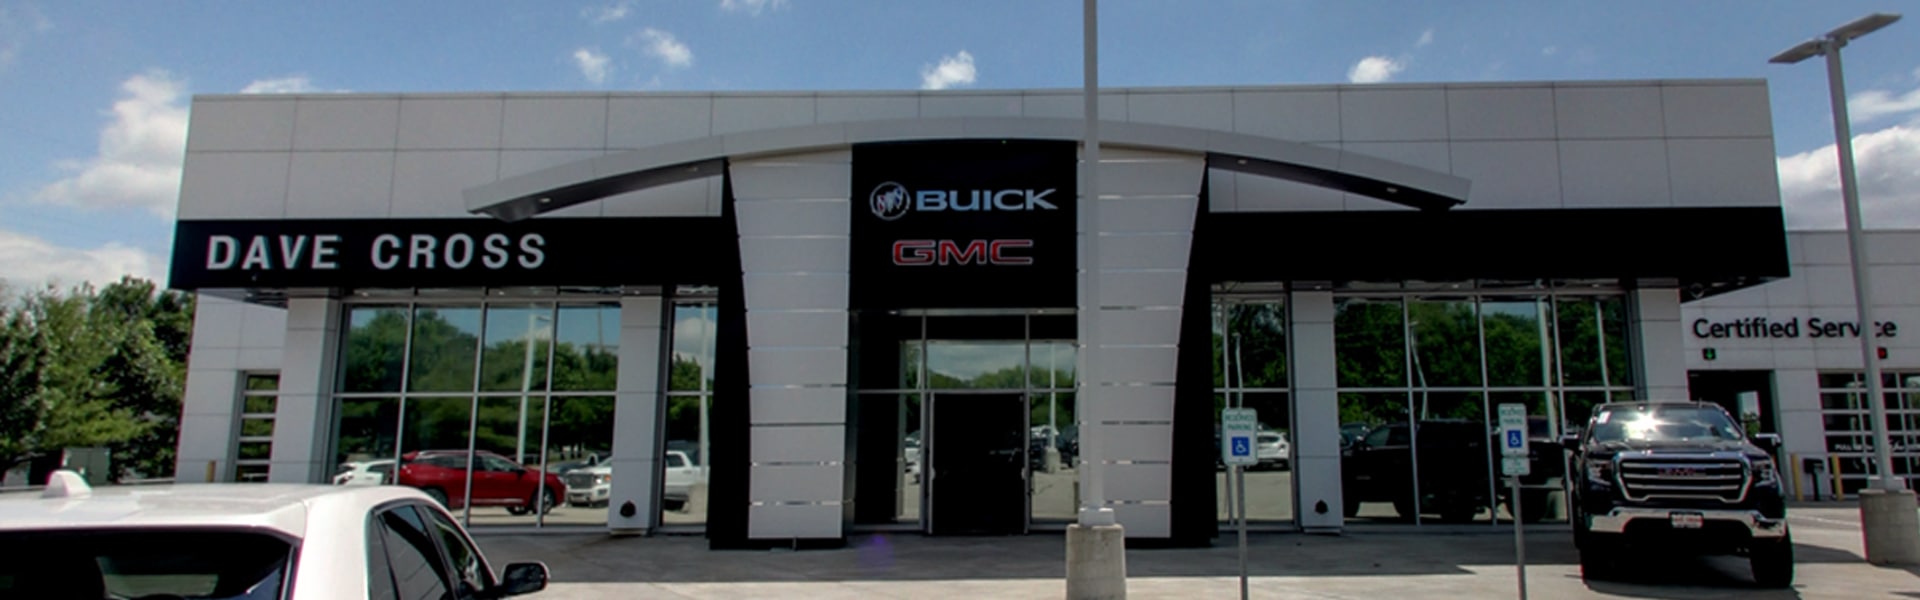 New Buick GMC Dealership Lee's Summit